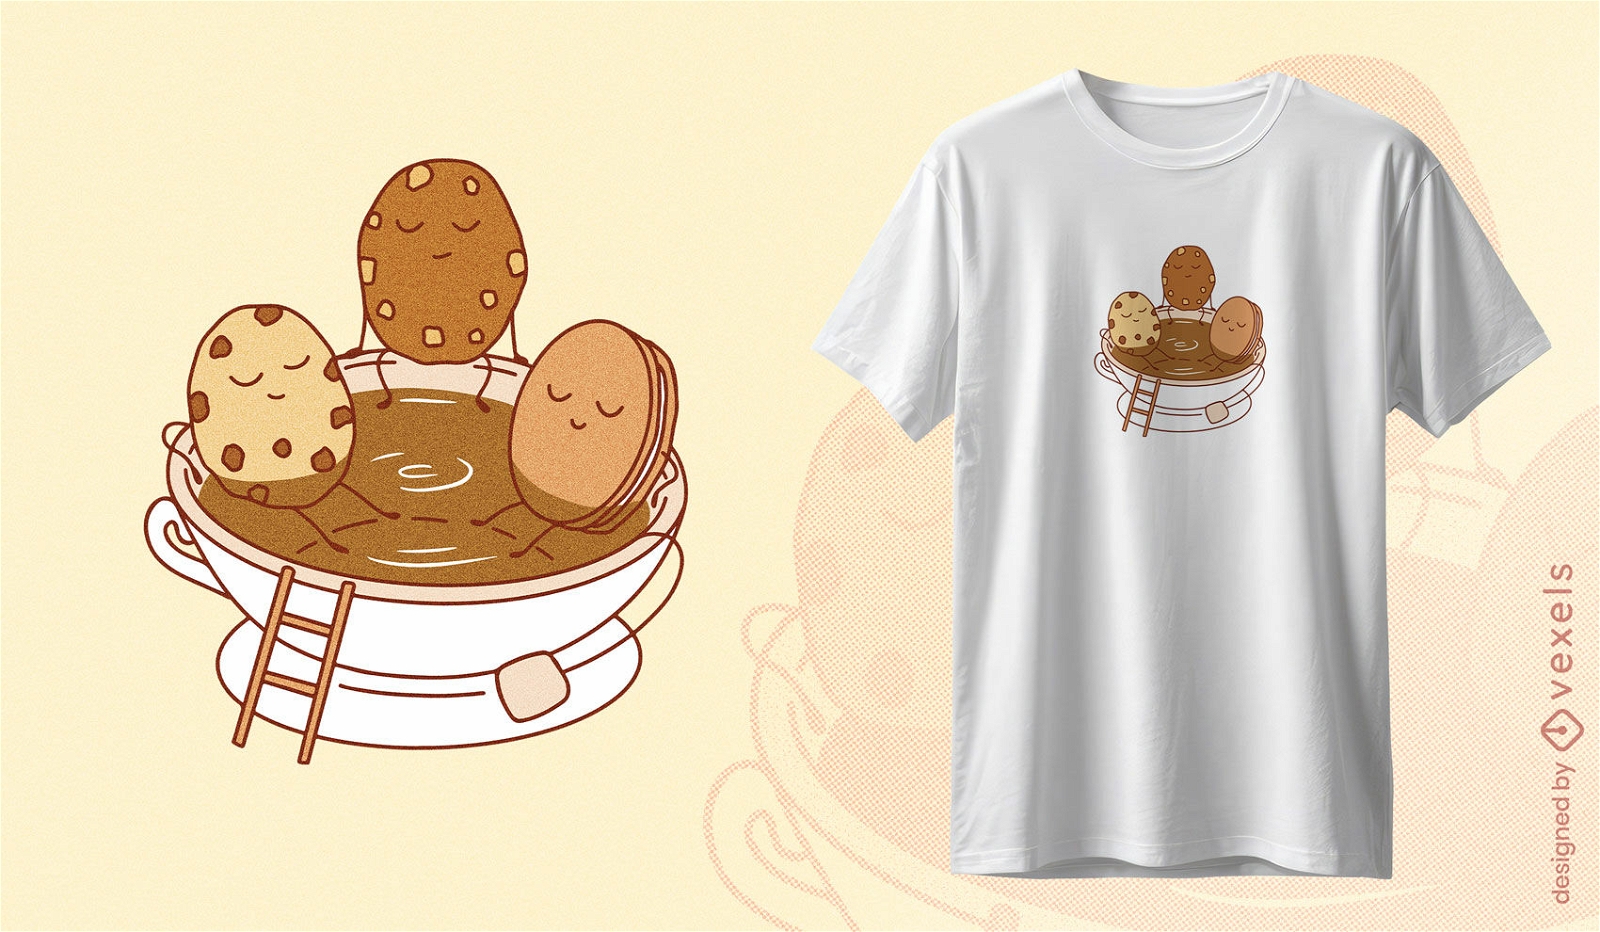 Cookies and tea t-shirt design